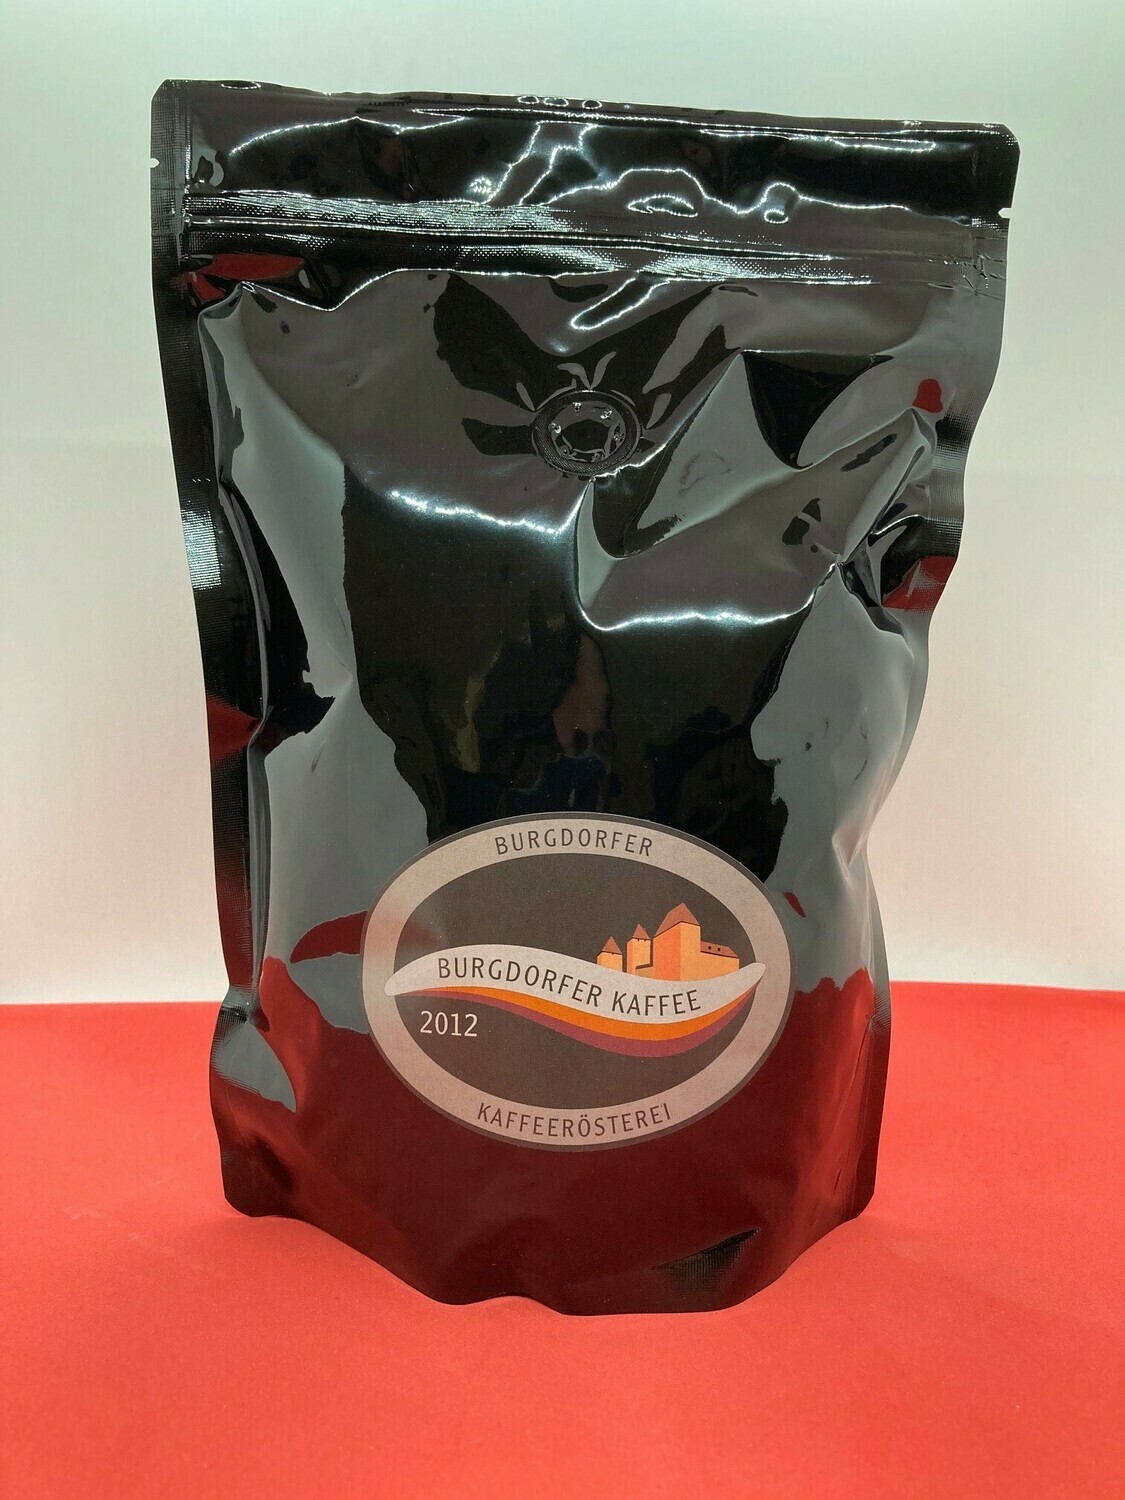 Burgdorfer Kaffee & Espresso